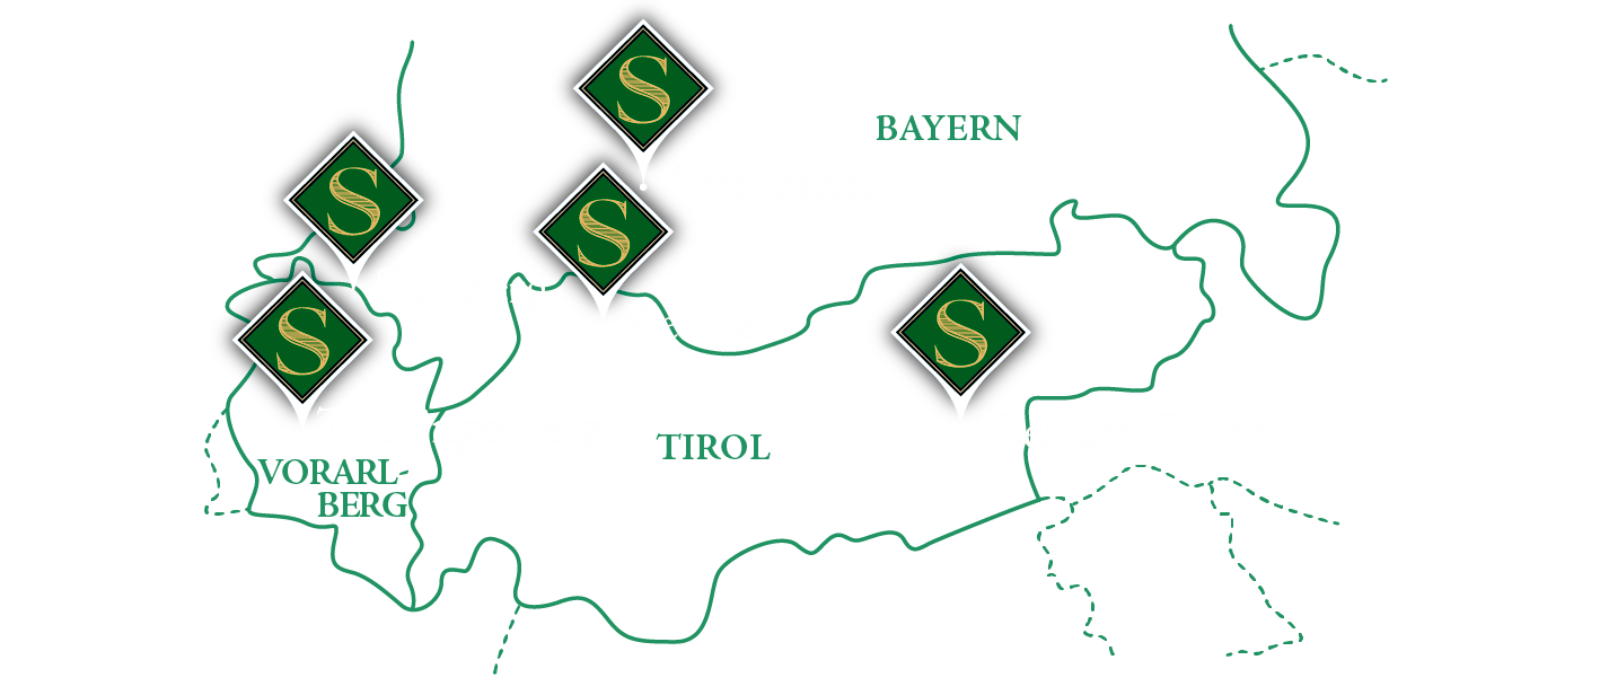 Standorte der Käserebellen: Thüringerberg, Sulzberg, Reutte, Zell am Ziller, Steingaden 